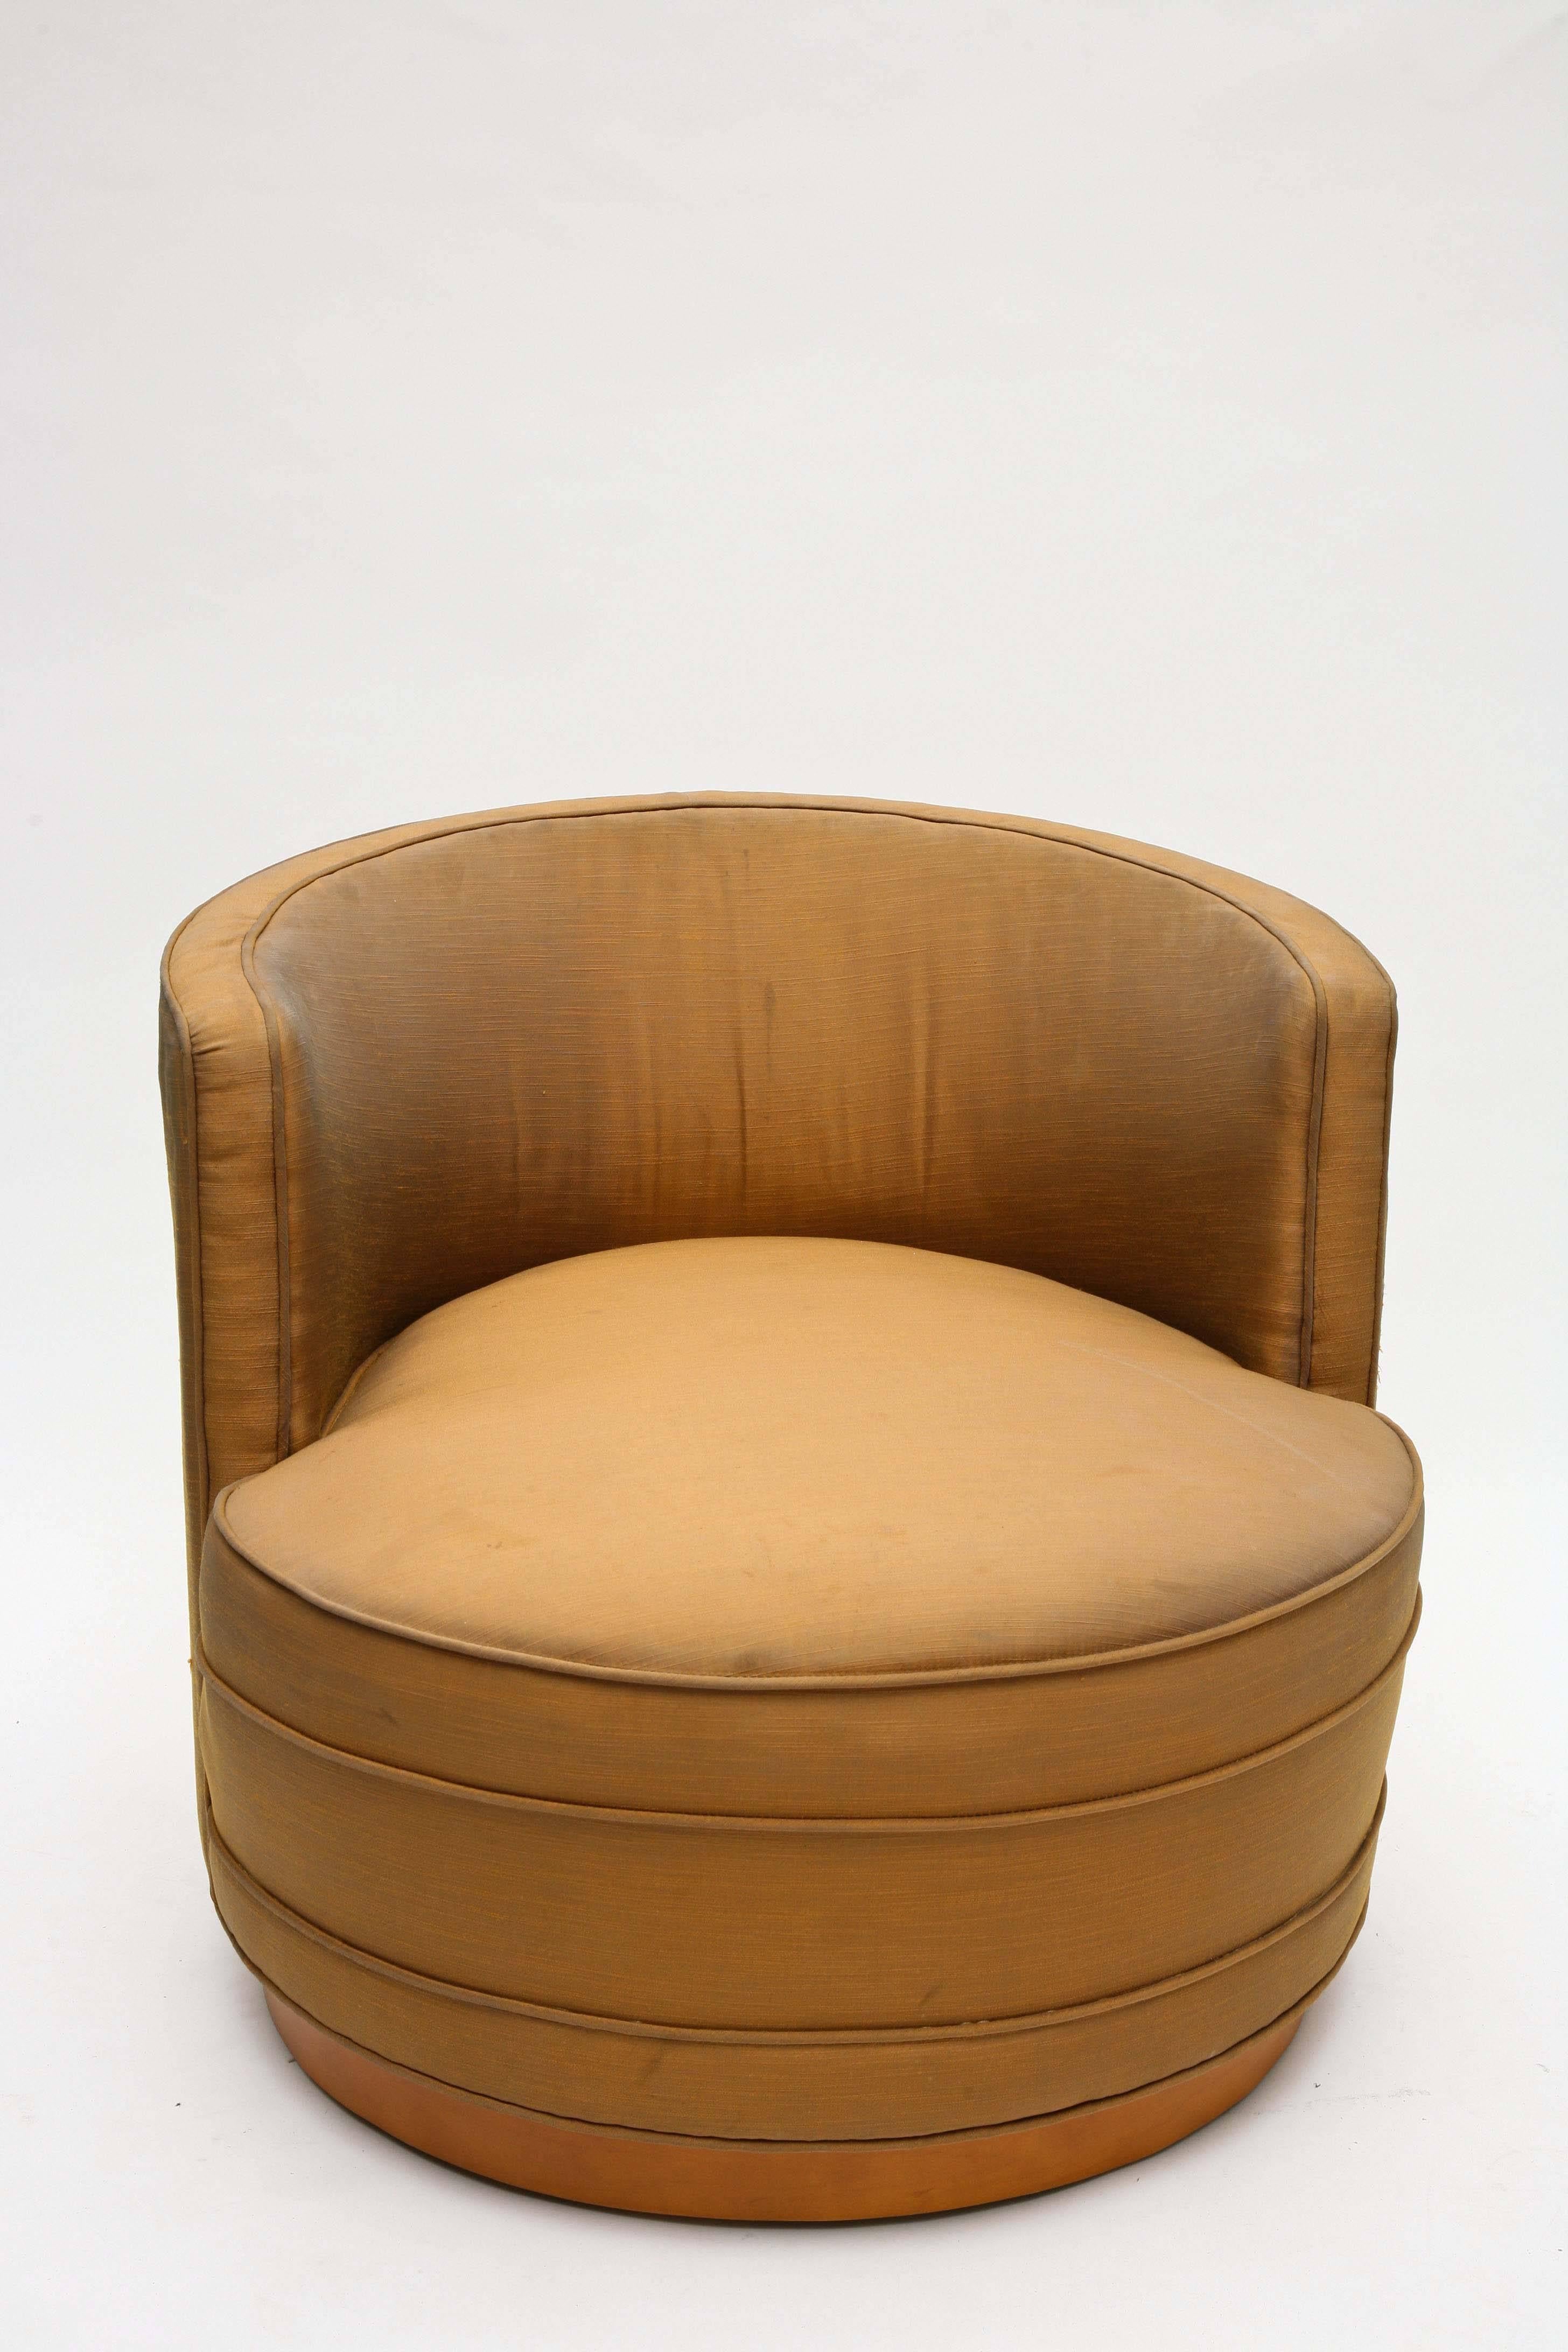 Mid-20th Century Edward Wormley Swivel Chairs